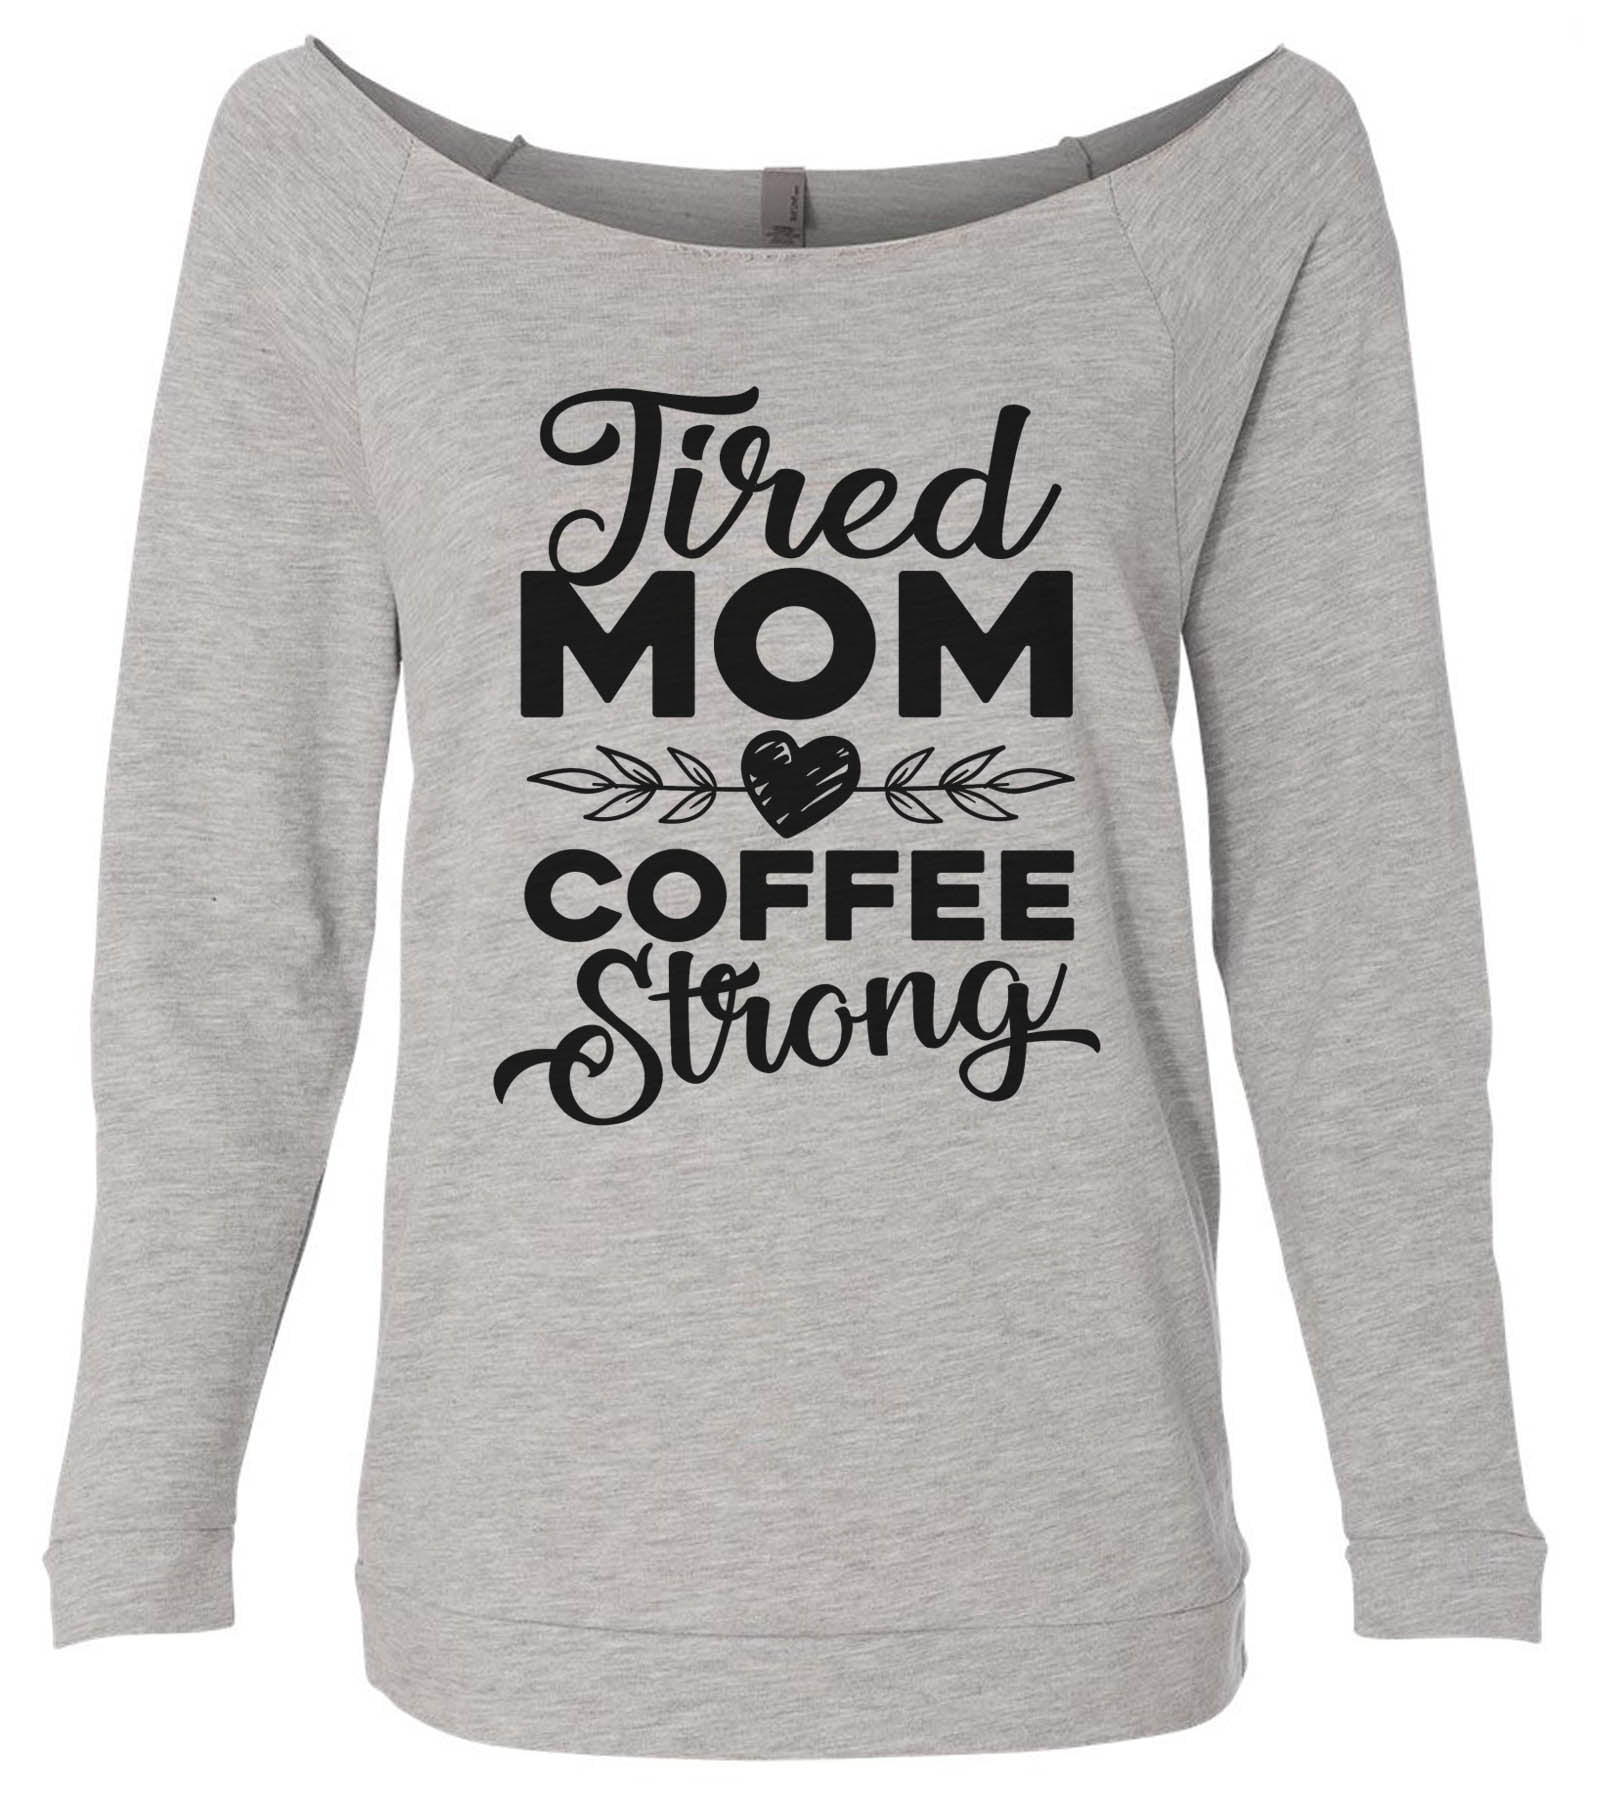 Crafty Girl Sewing Fabric and Coffee Lover Hand Me Coffee And Knitting Shirt Mama Gift Fabric Addict Hoodie Sweatshirt Tee Plus Size